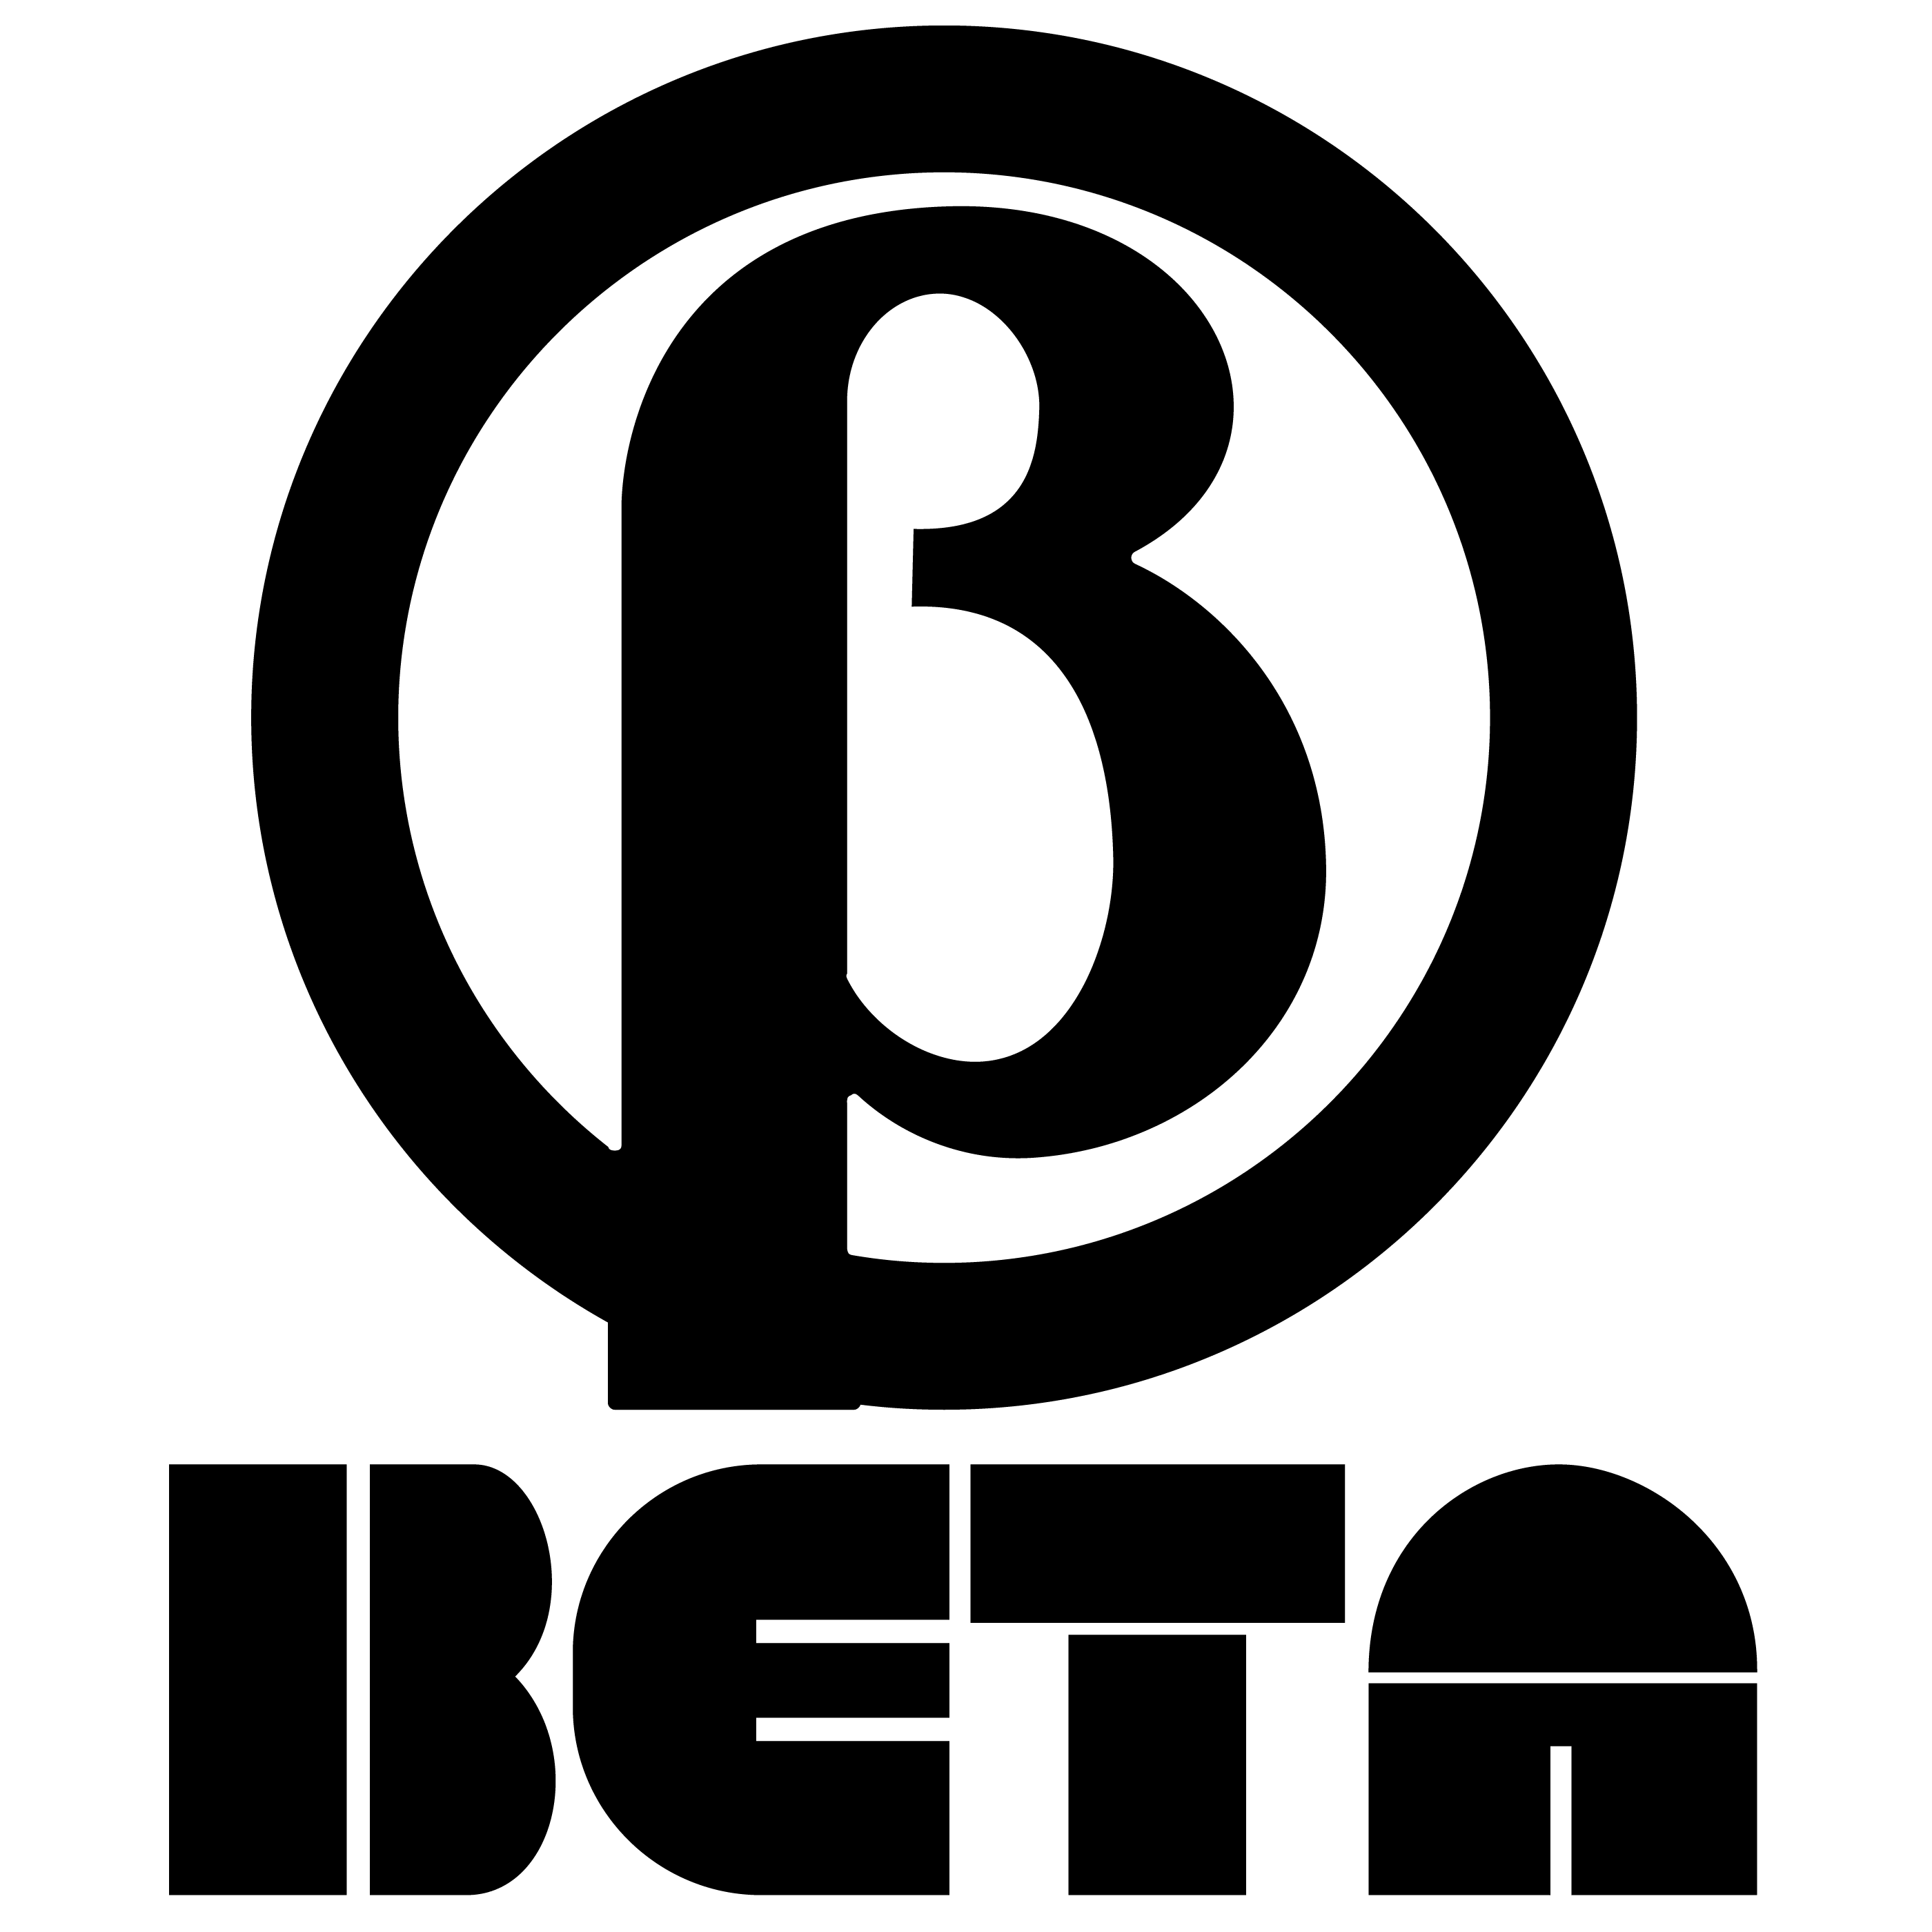 Beta Logo - Beta motorcycle logo history and Meaning, bike emblem